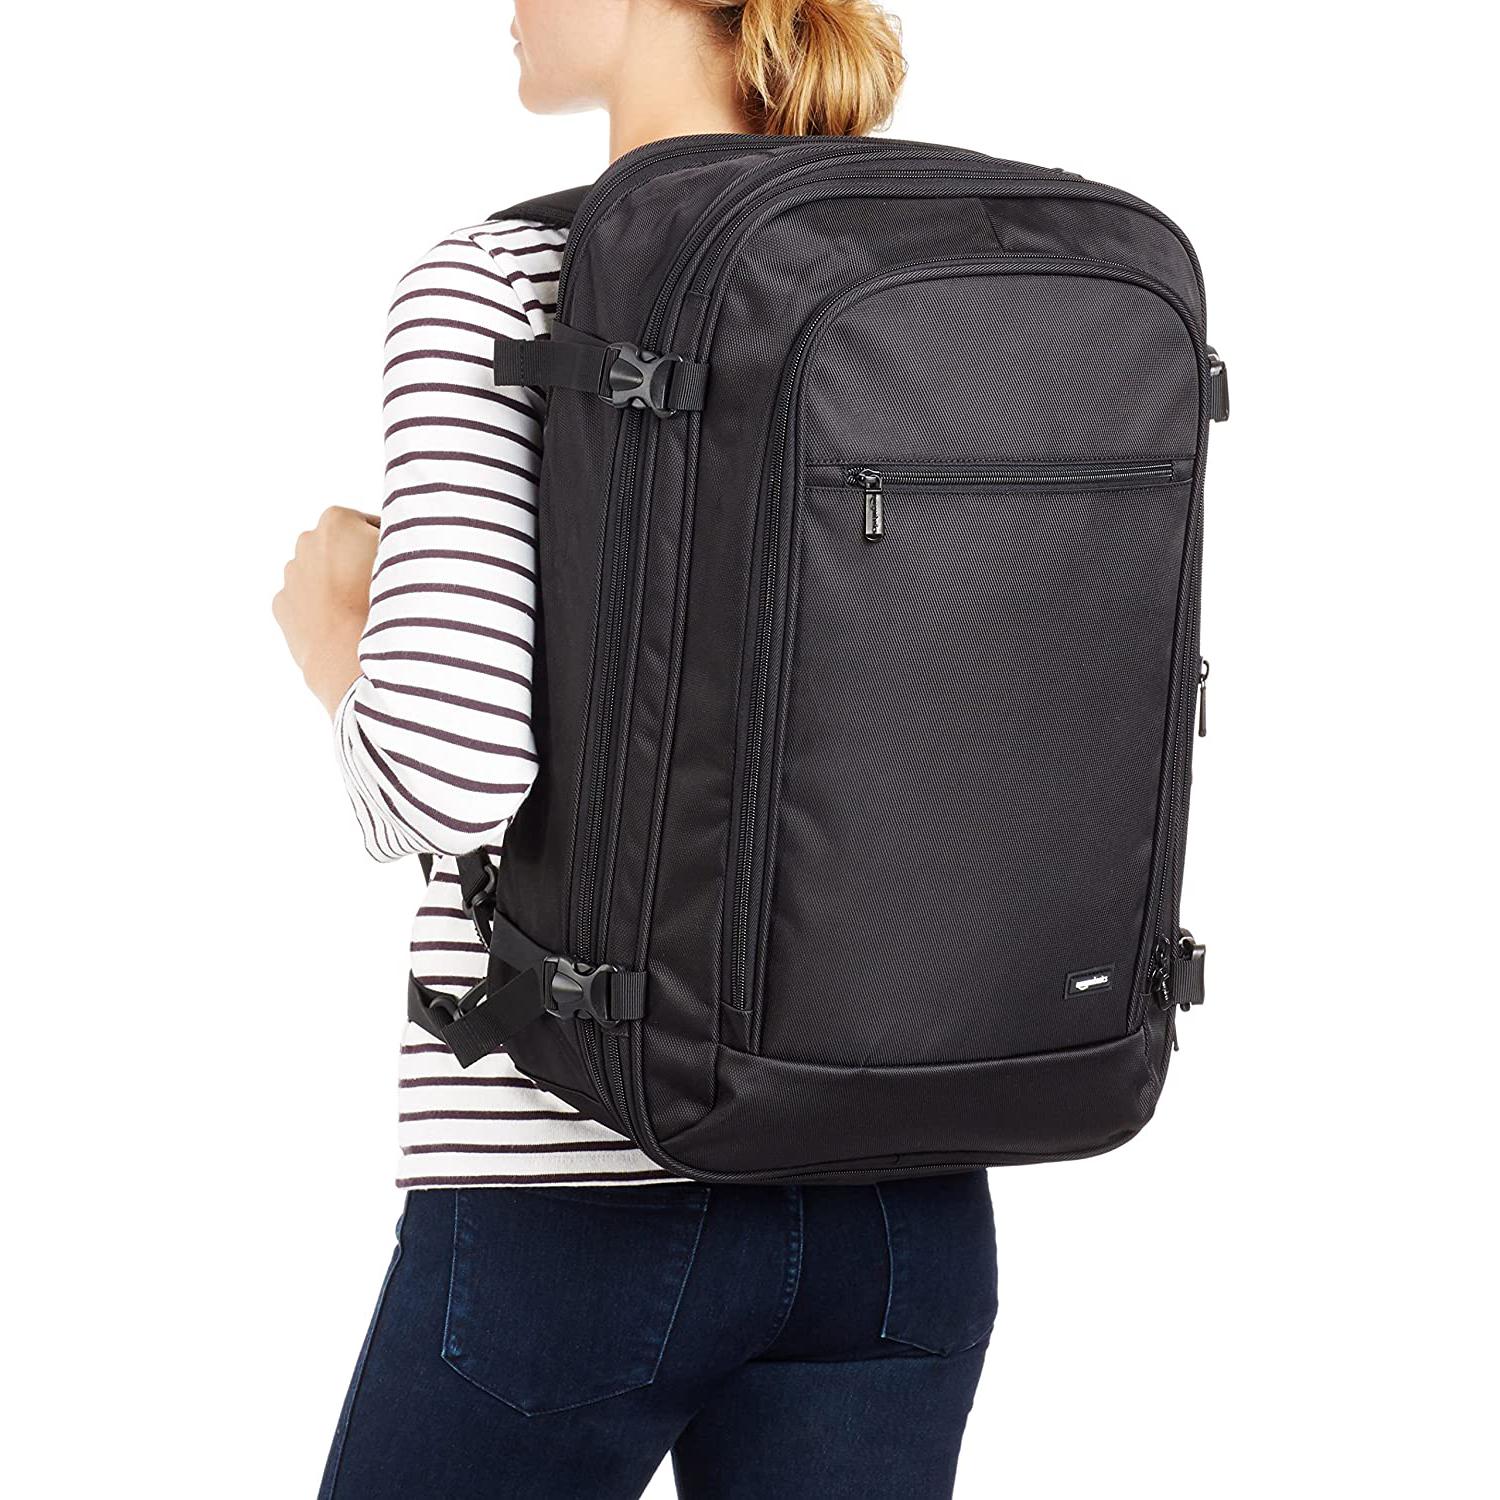 Amazon Basics Carry-On Travel Backpack for $33.36 Shipped